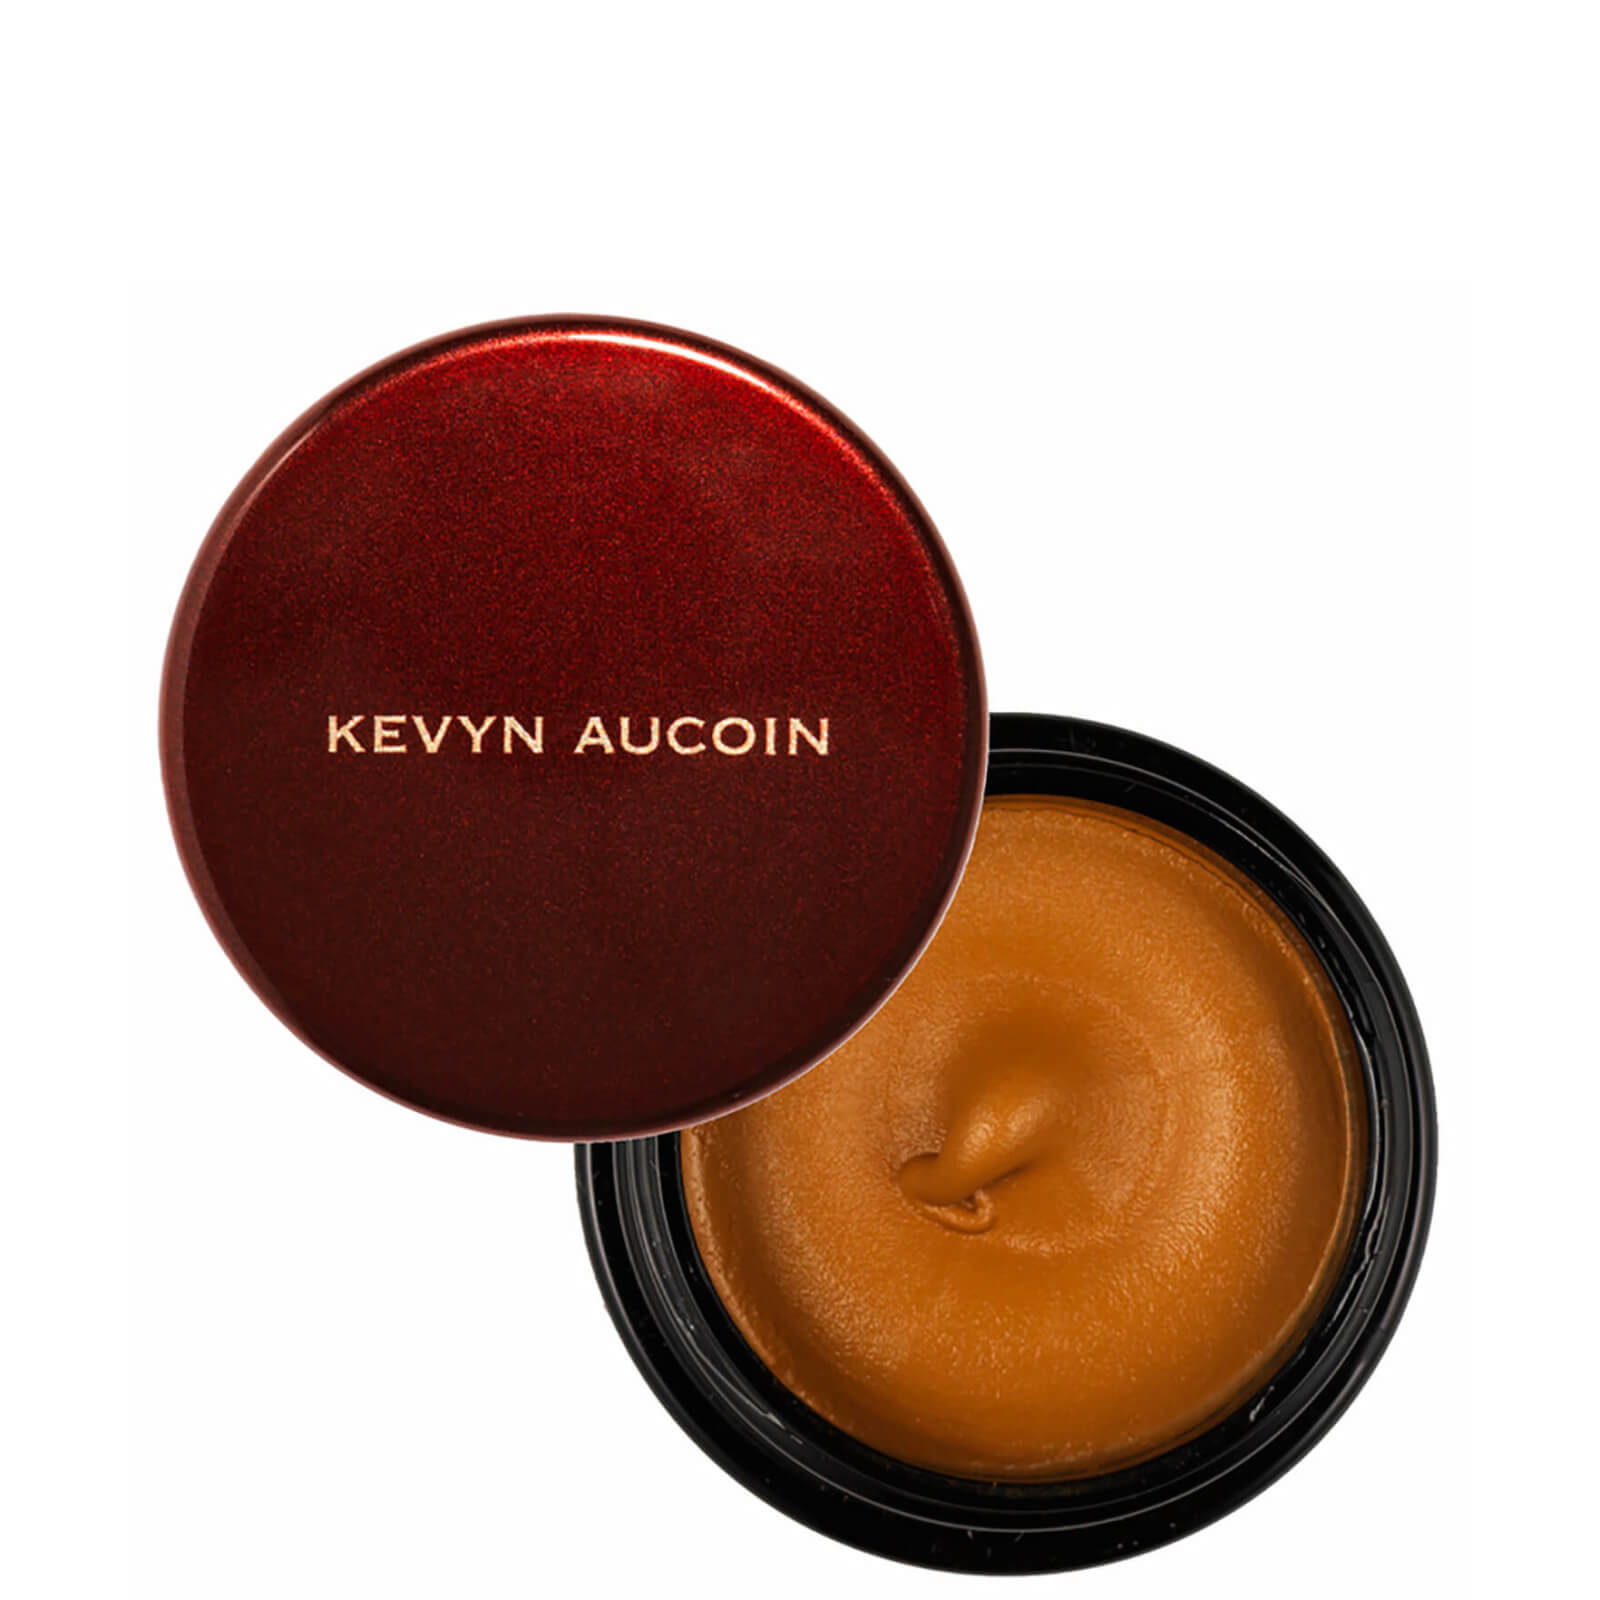 Kevyn Aucoin The Sensual Skin Enhancer (Various Shades) – SX 12 lookfantastic.com imagine